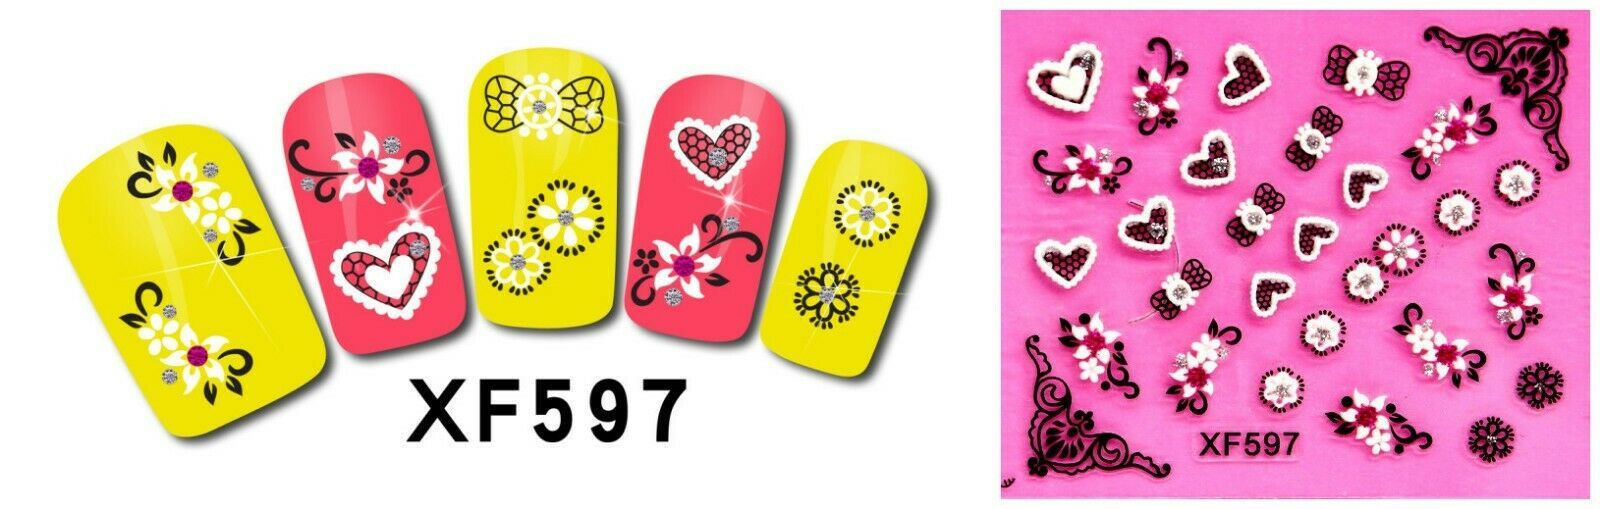 Nail Art 3D Stickers Stones Design Decoration Tips Heart White Black XF597